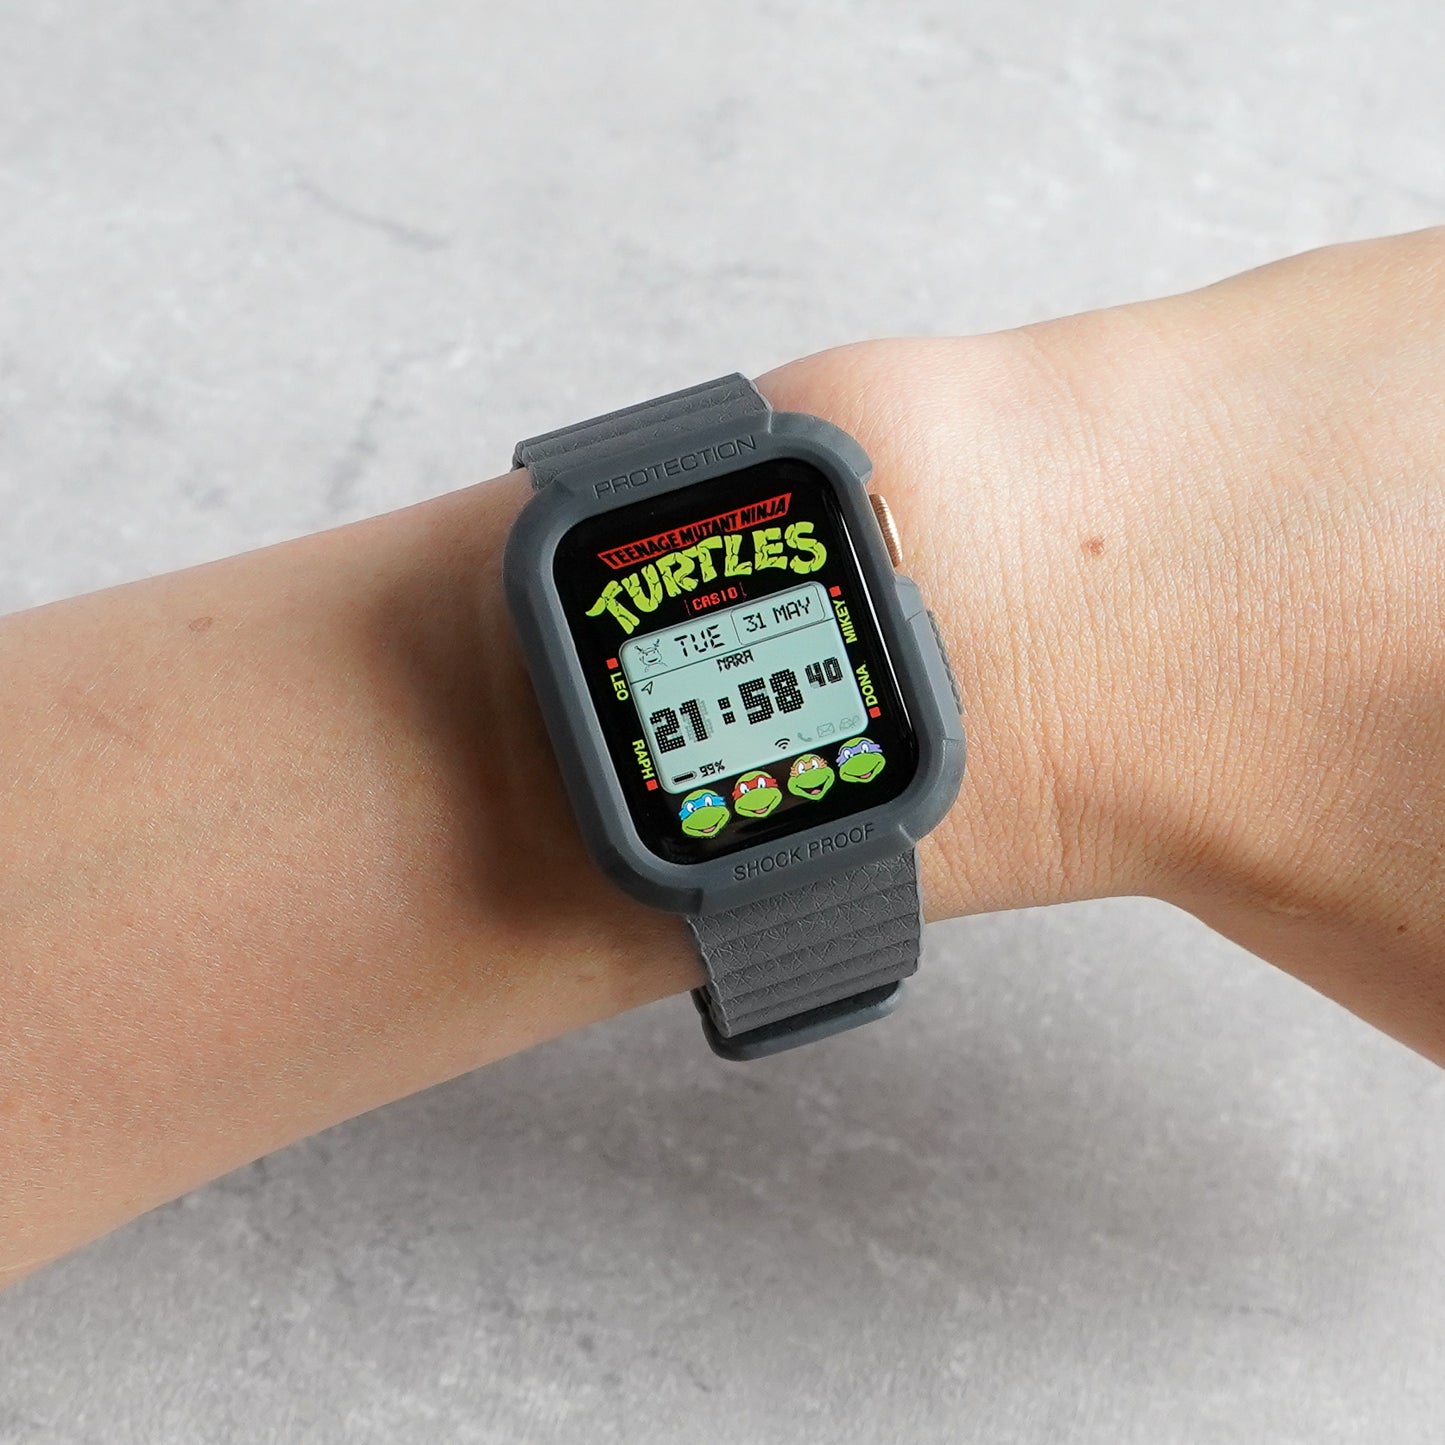 TPU プロテクト マット 保護フレーム ソフトタイプ アップルウォッチ ハーフカバー Apple Watch